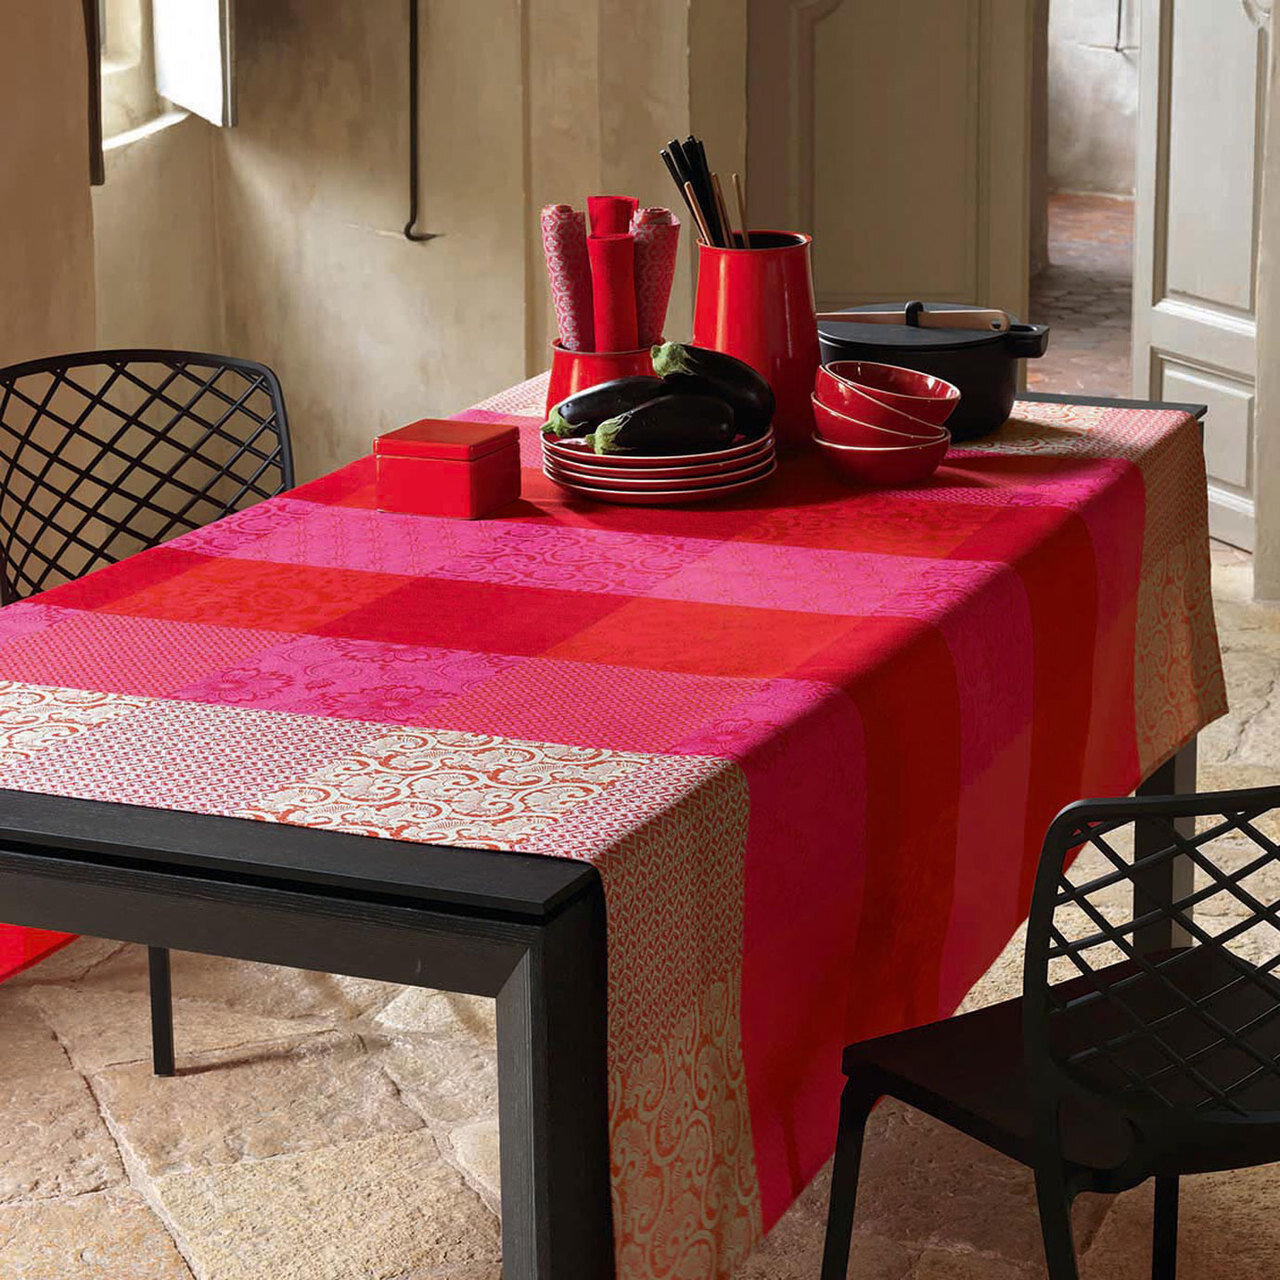 Le Jacquard Francais Tablecloth Kyoto Cherry 69 x 69 Cotton and Acrylicic